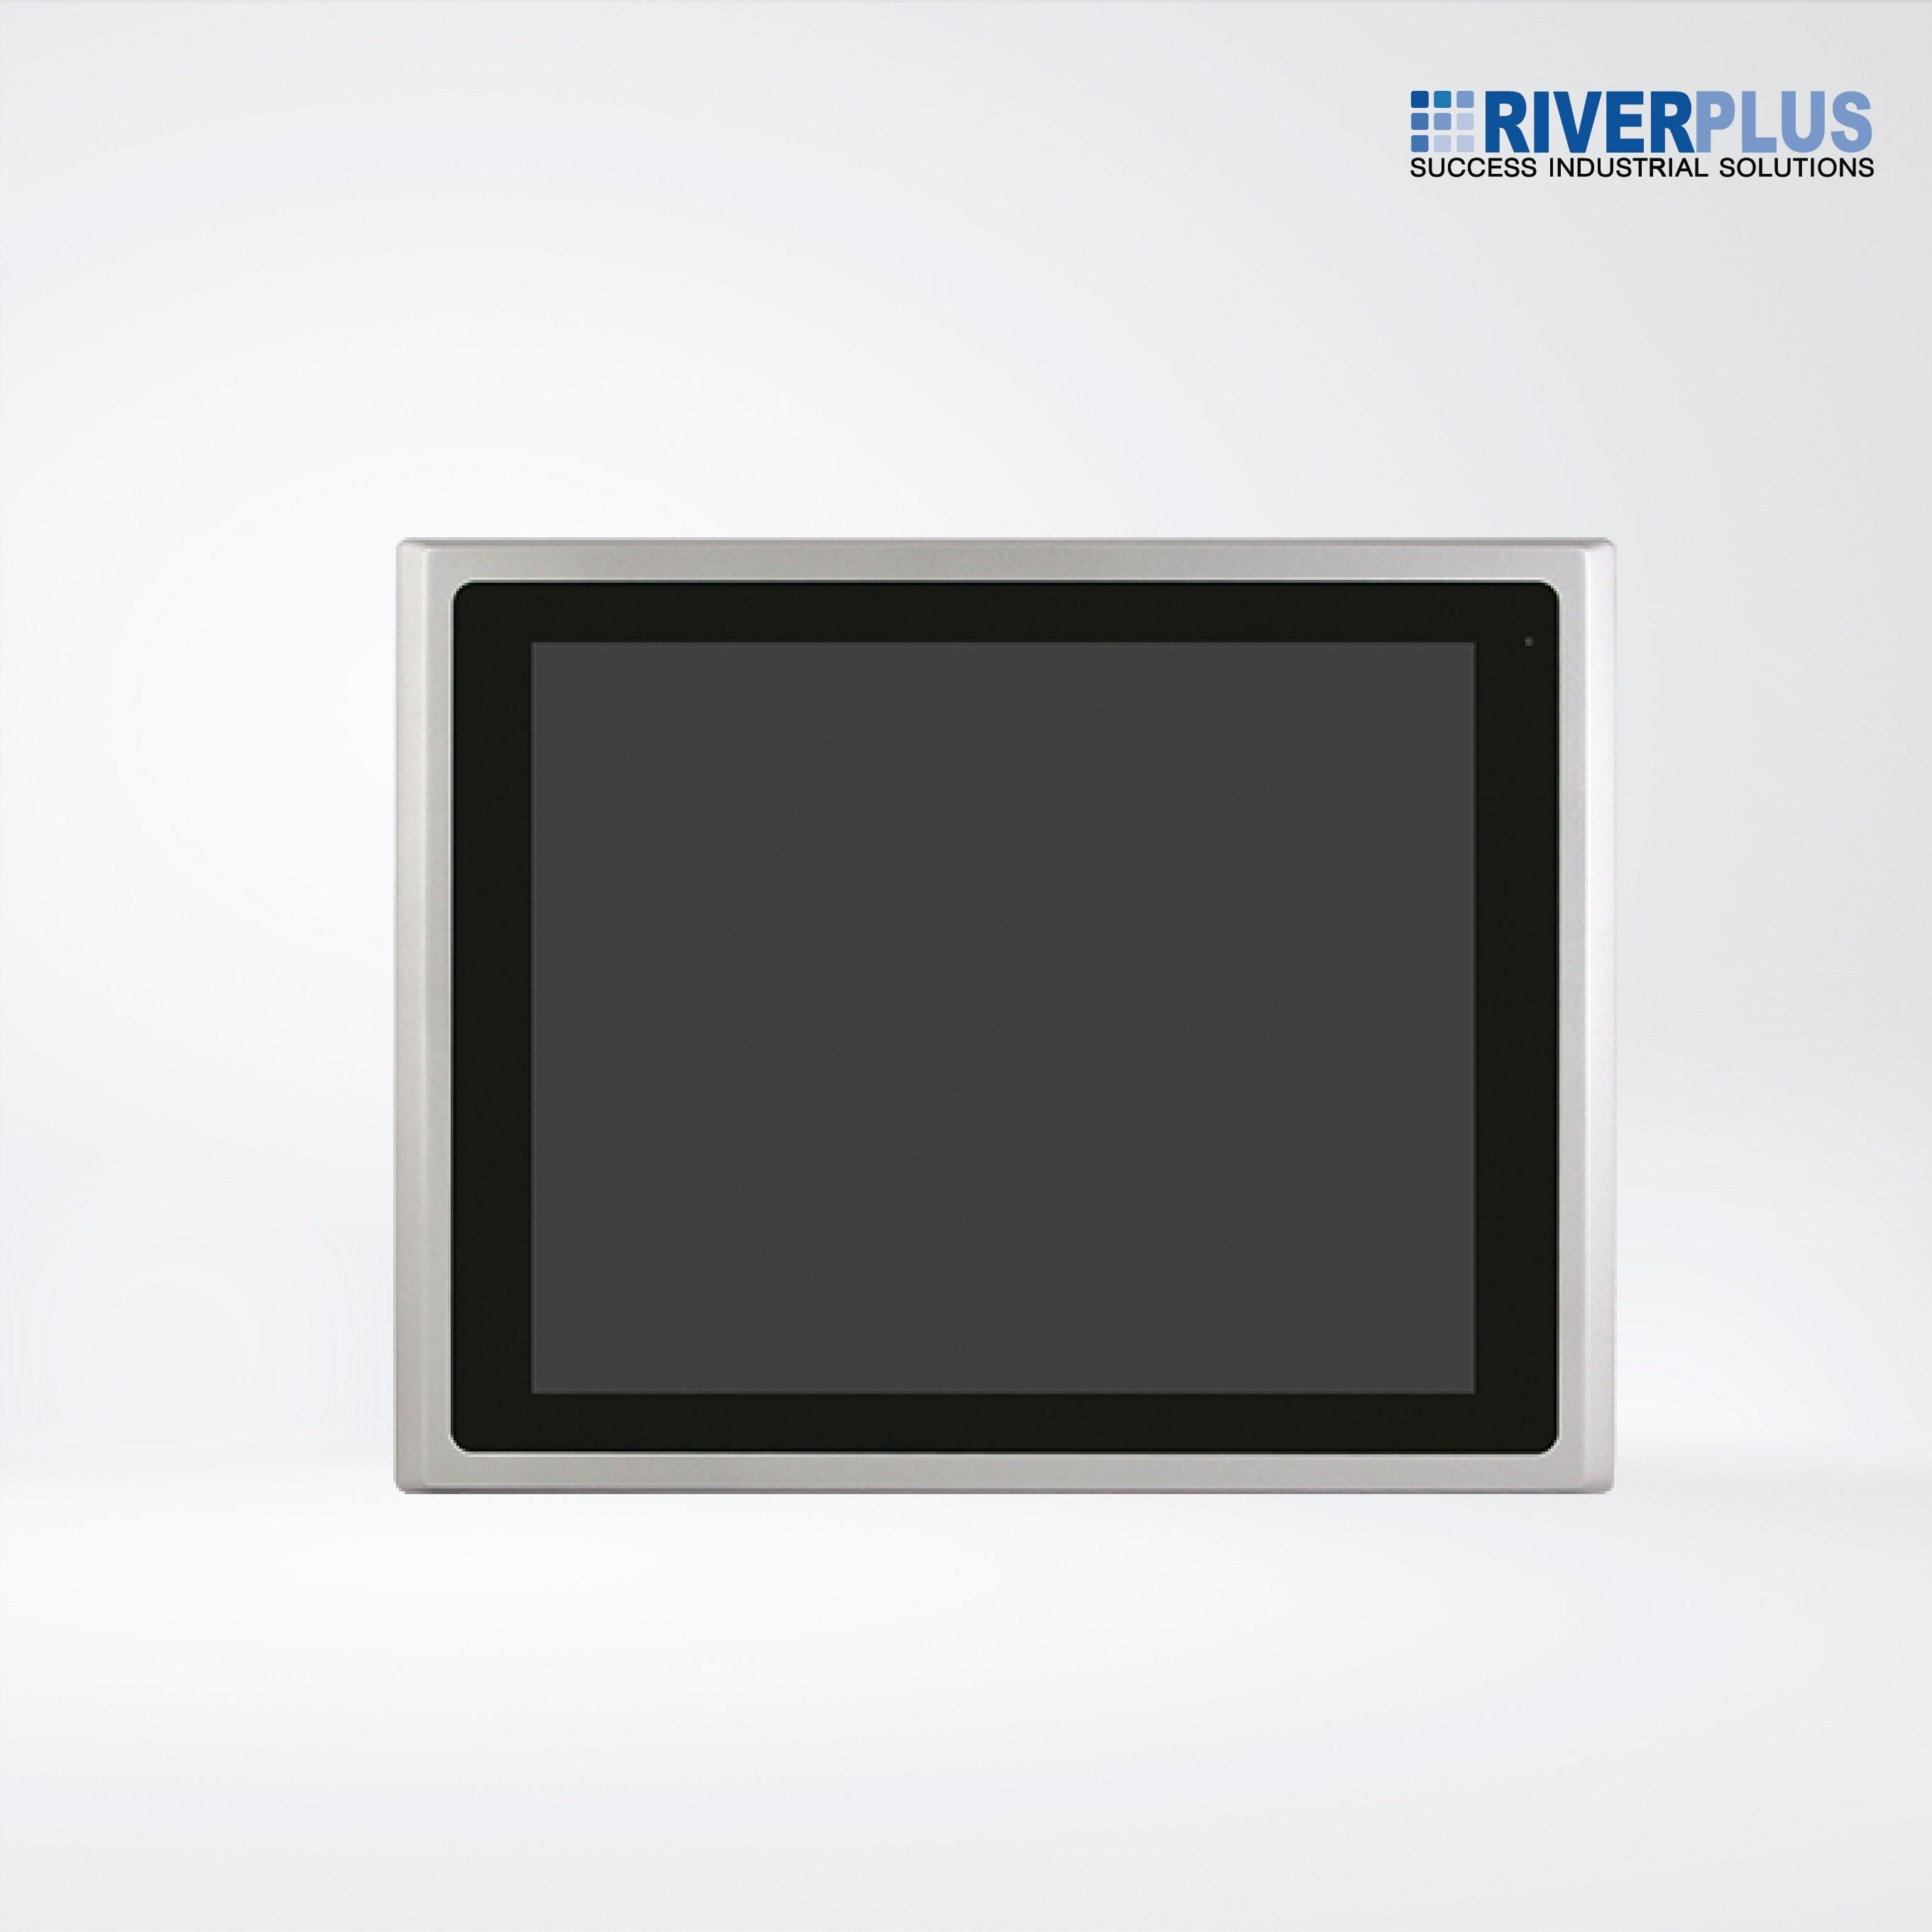 ViPAC-917G 17” Intel 6th/7th Core i3/i5/i7 Panel PC - Riverplus